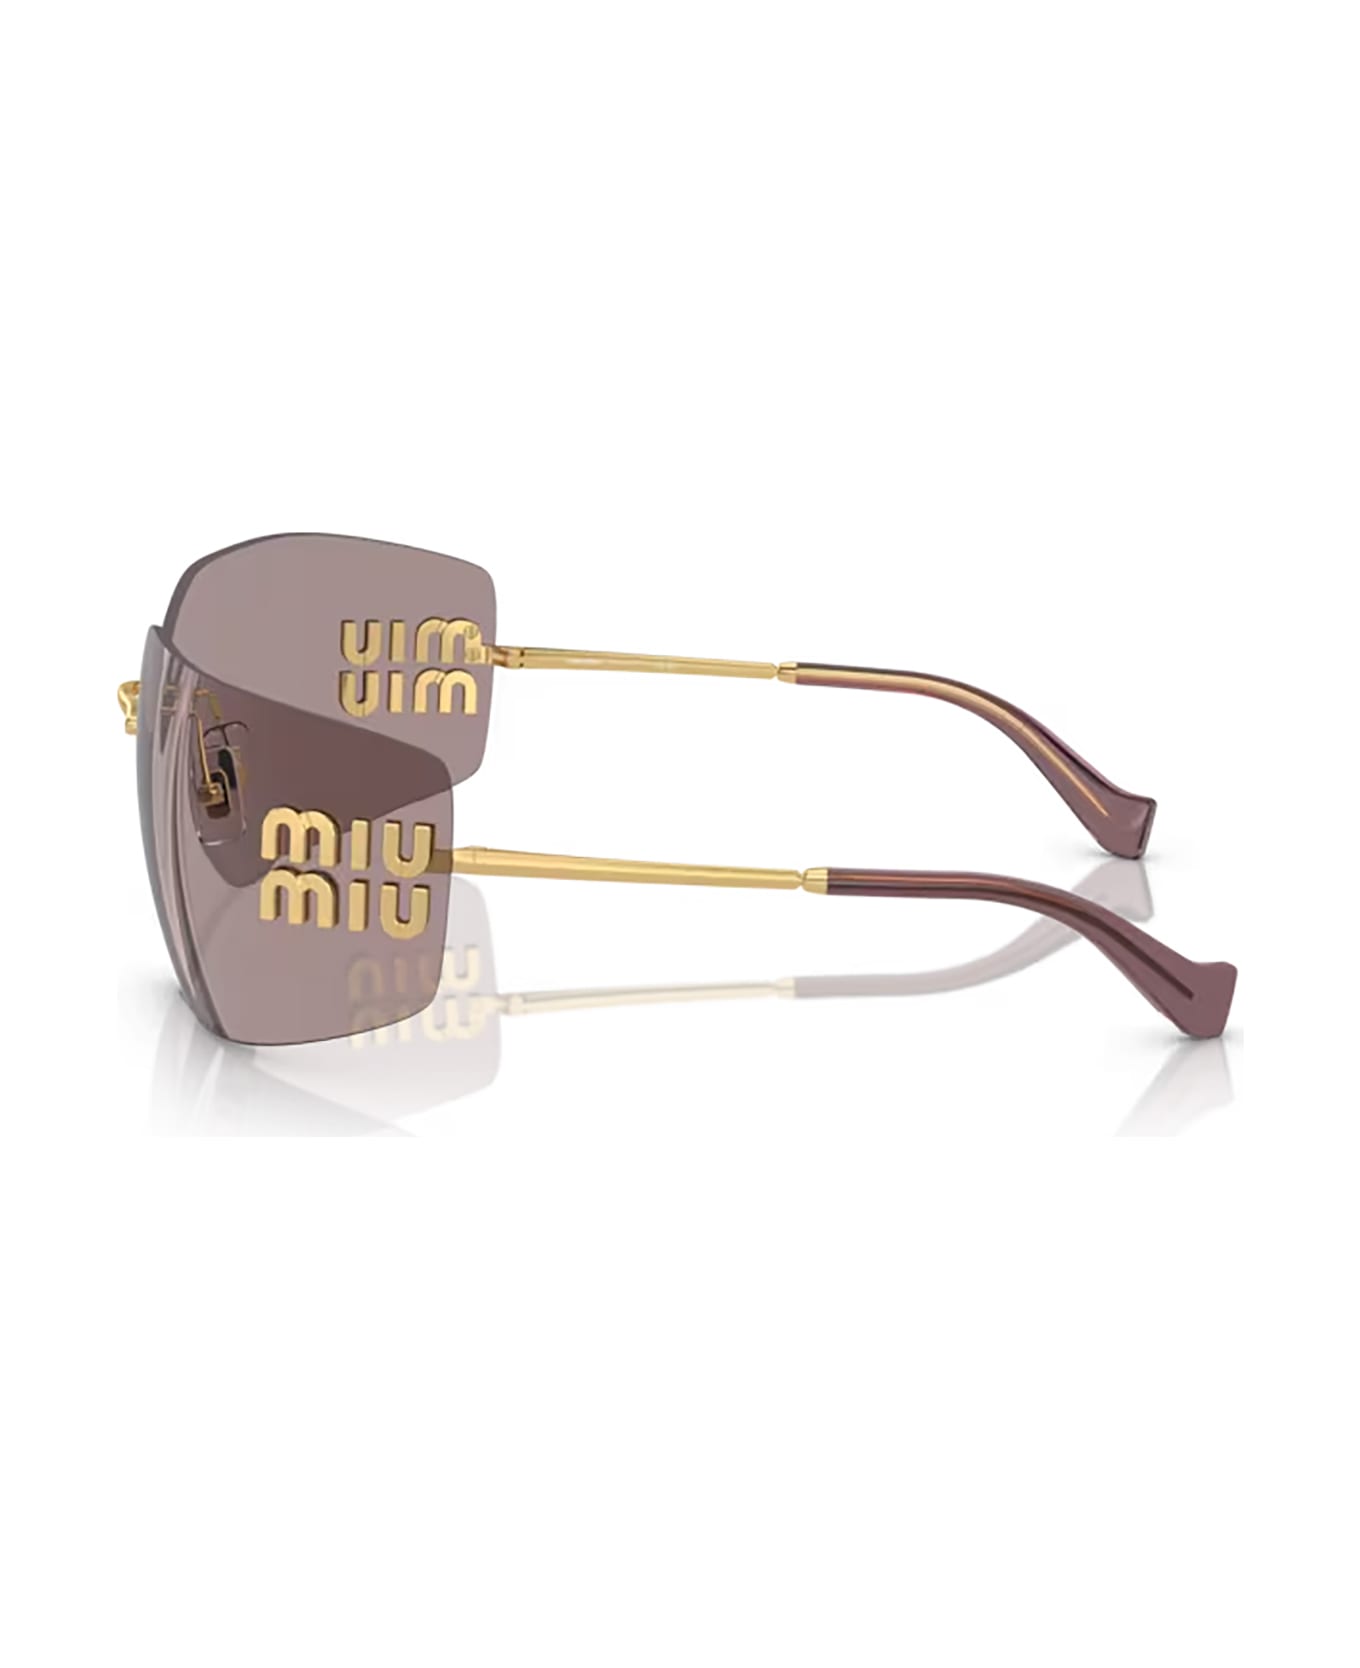 Miu Miu Eyewear Mu 54ys Gold Sunglasses - Gold